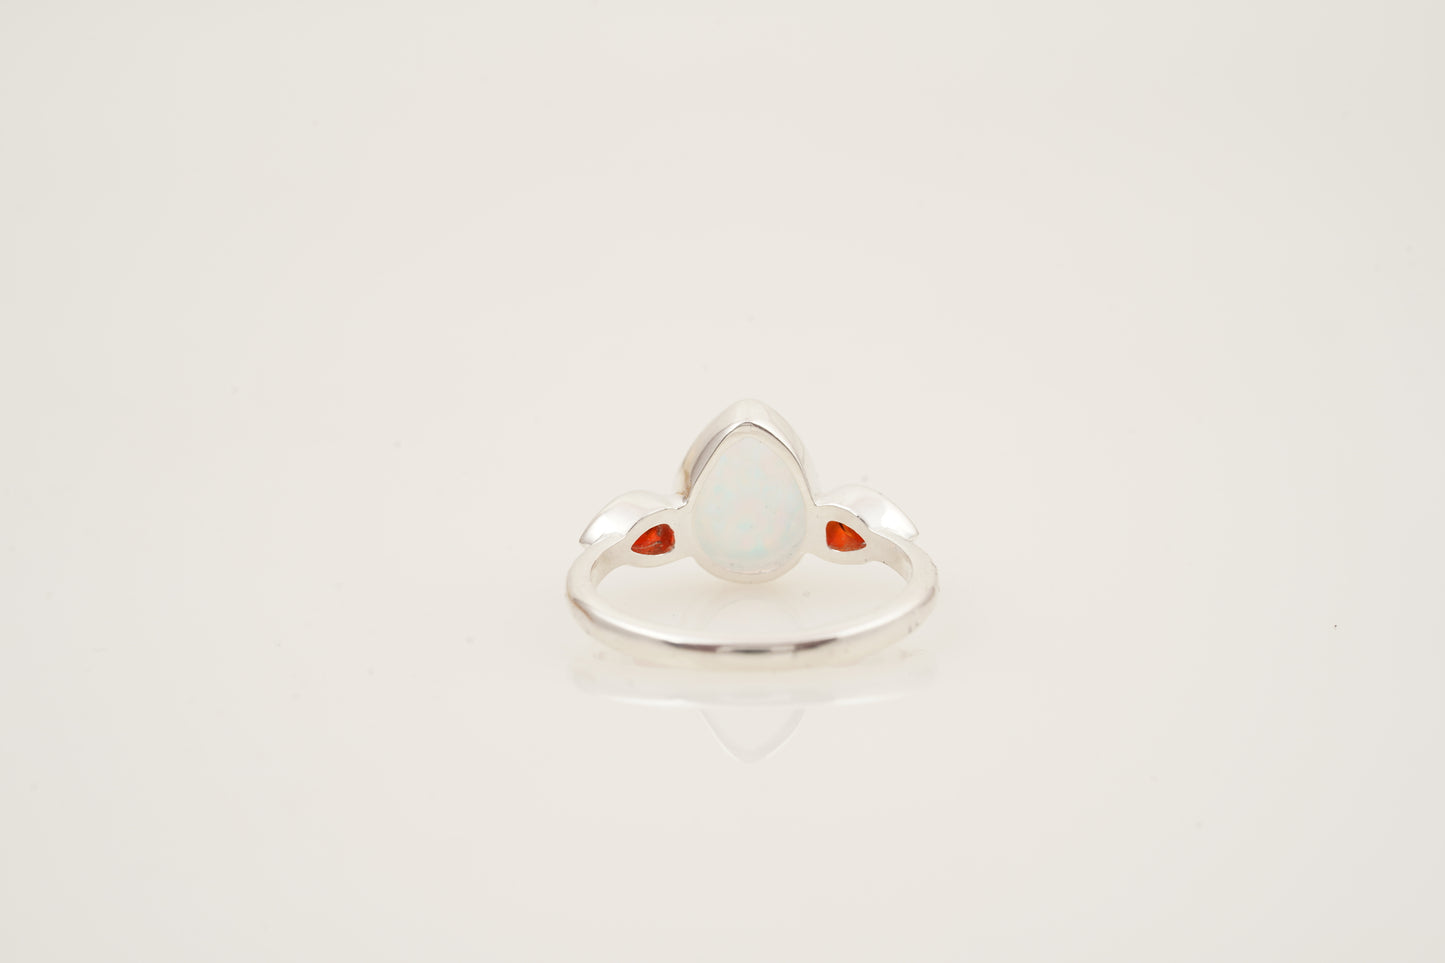 Pear Cut Fire Opal Engagement Ring Bezel Set Ring